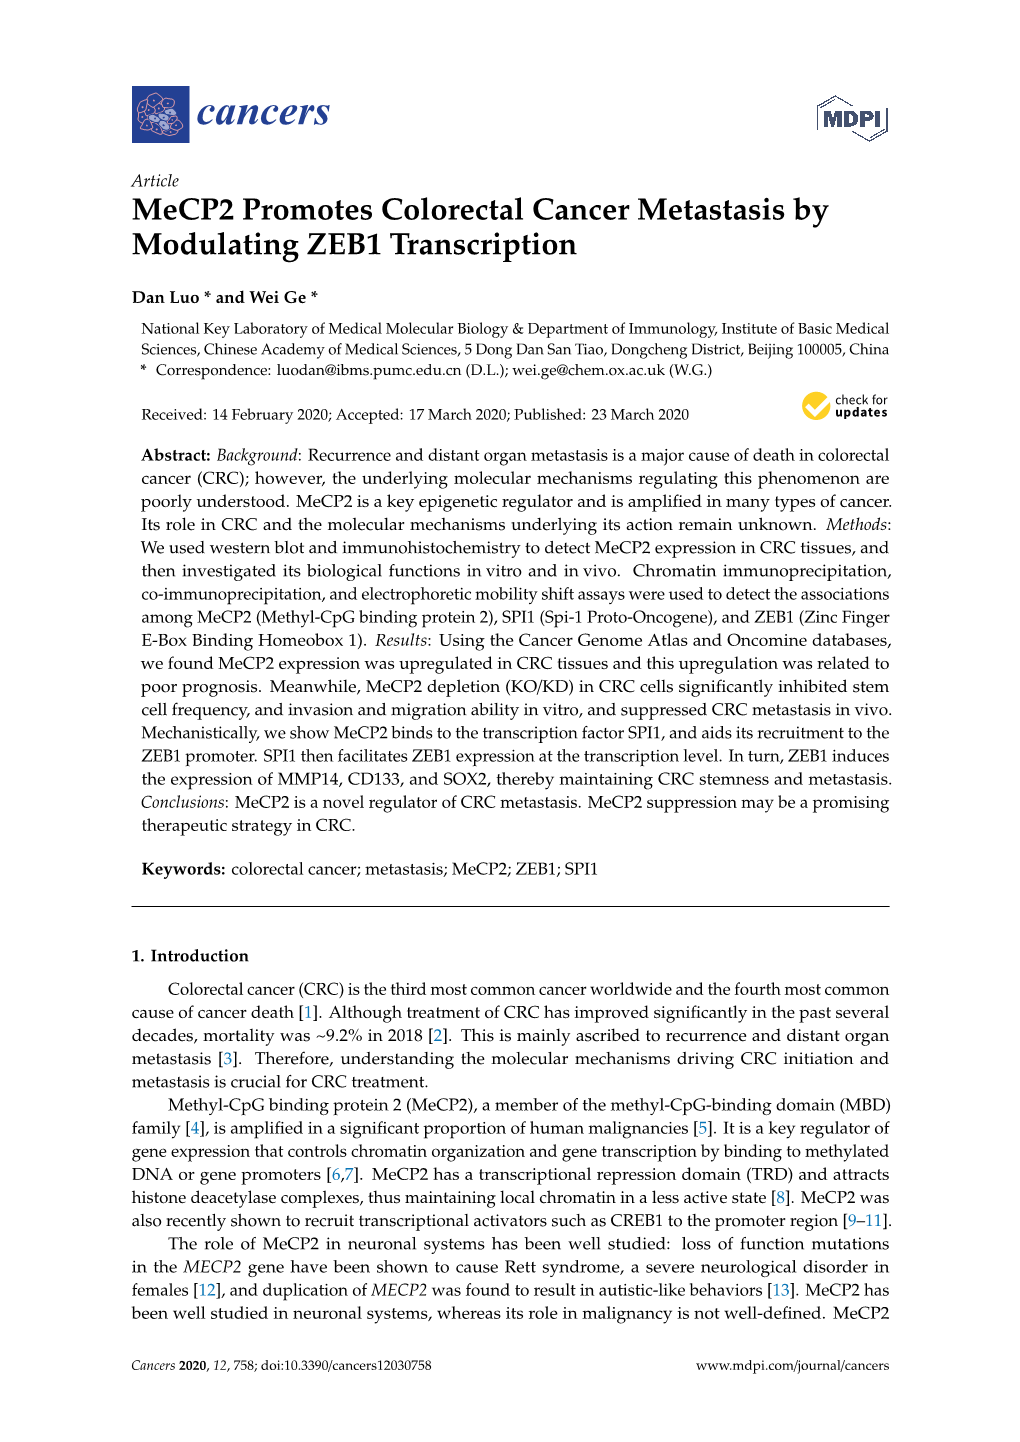 Mecp2 Promotes Colorectal Cancer Metastasis by Modulating ZEB1 Transcription